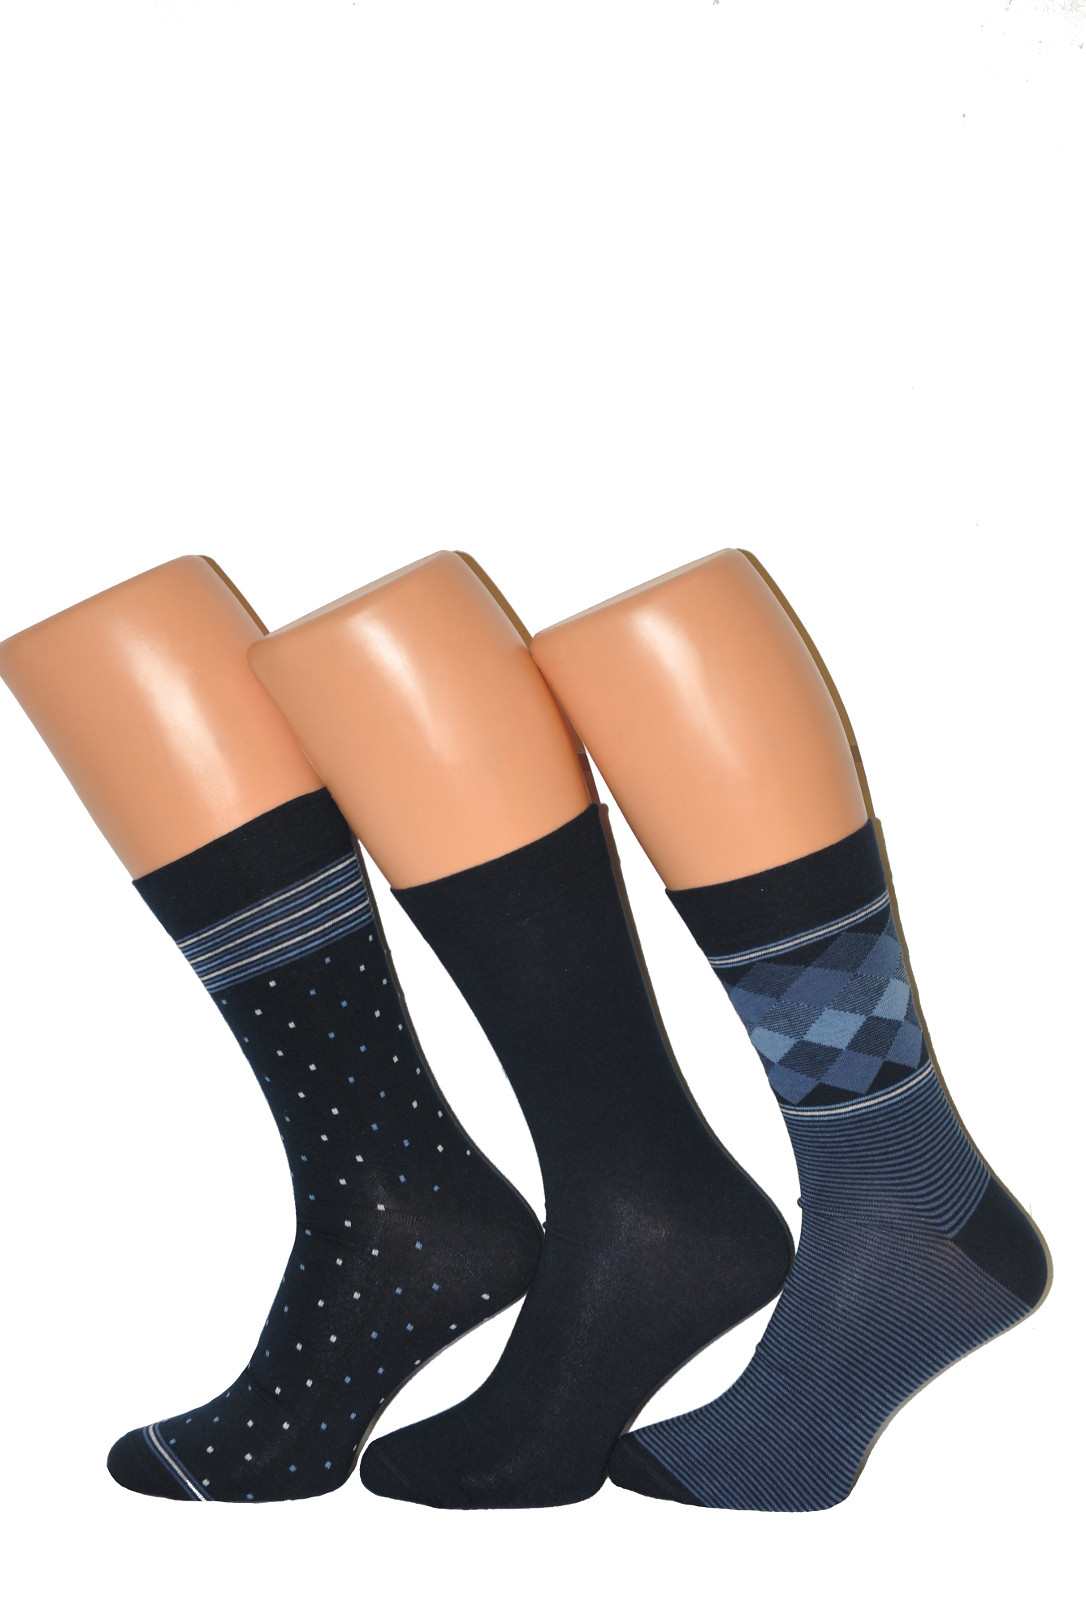 Pánské ponožky Cornette Premium A40 A'3 tmavě modrá 42-44